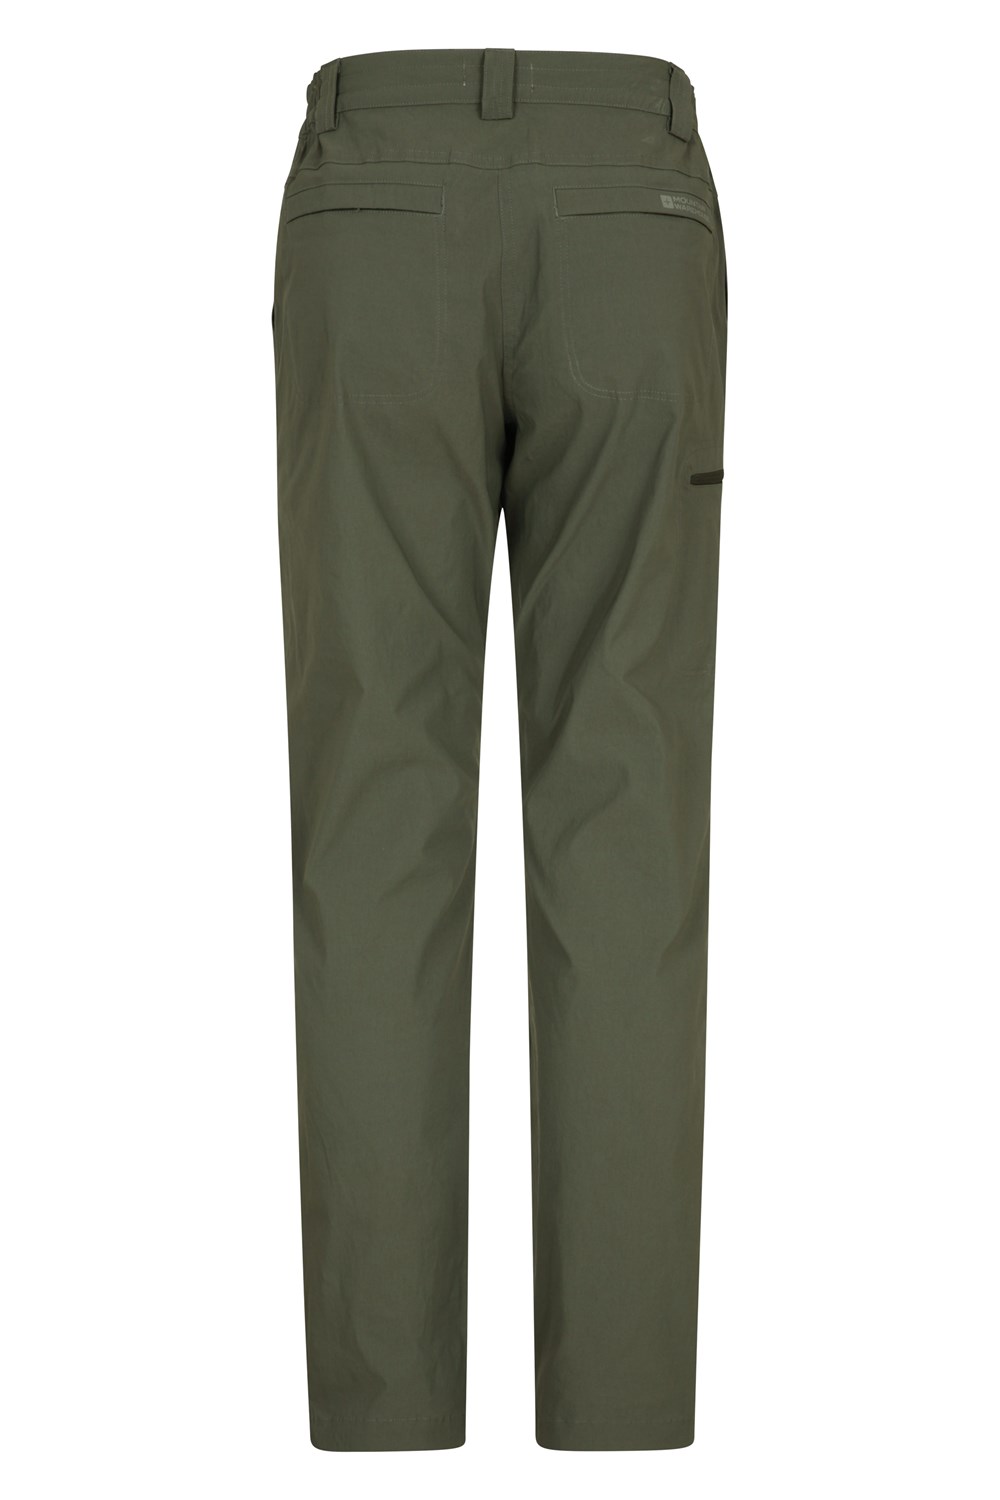 Mountain Warehouse Hiker Womens Stretch Trousers - UV Treatment Pants ...